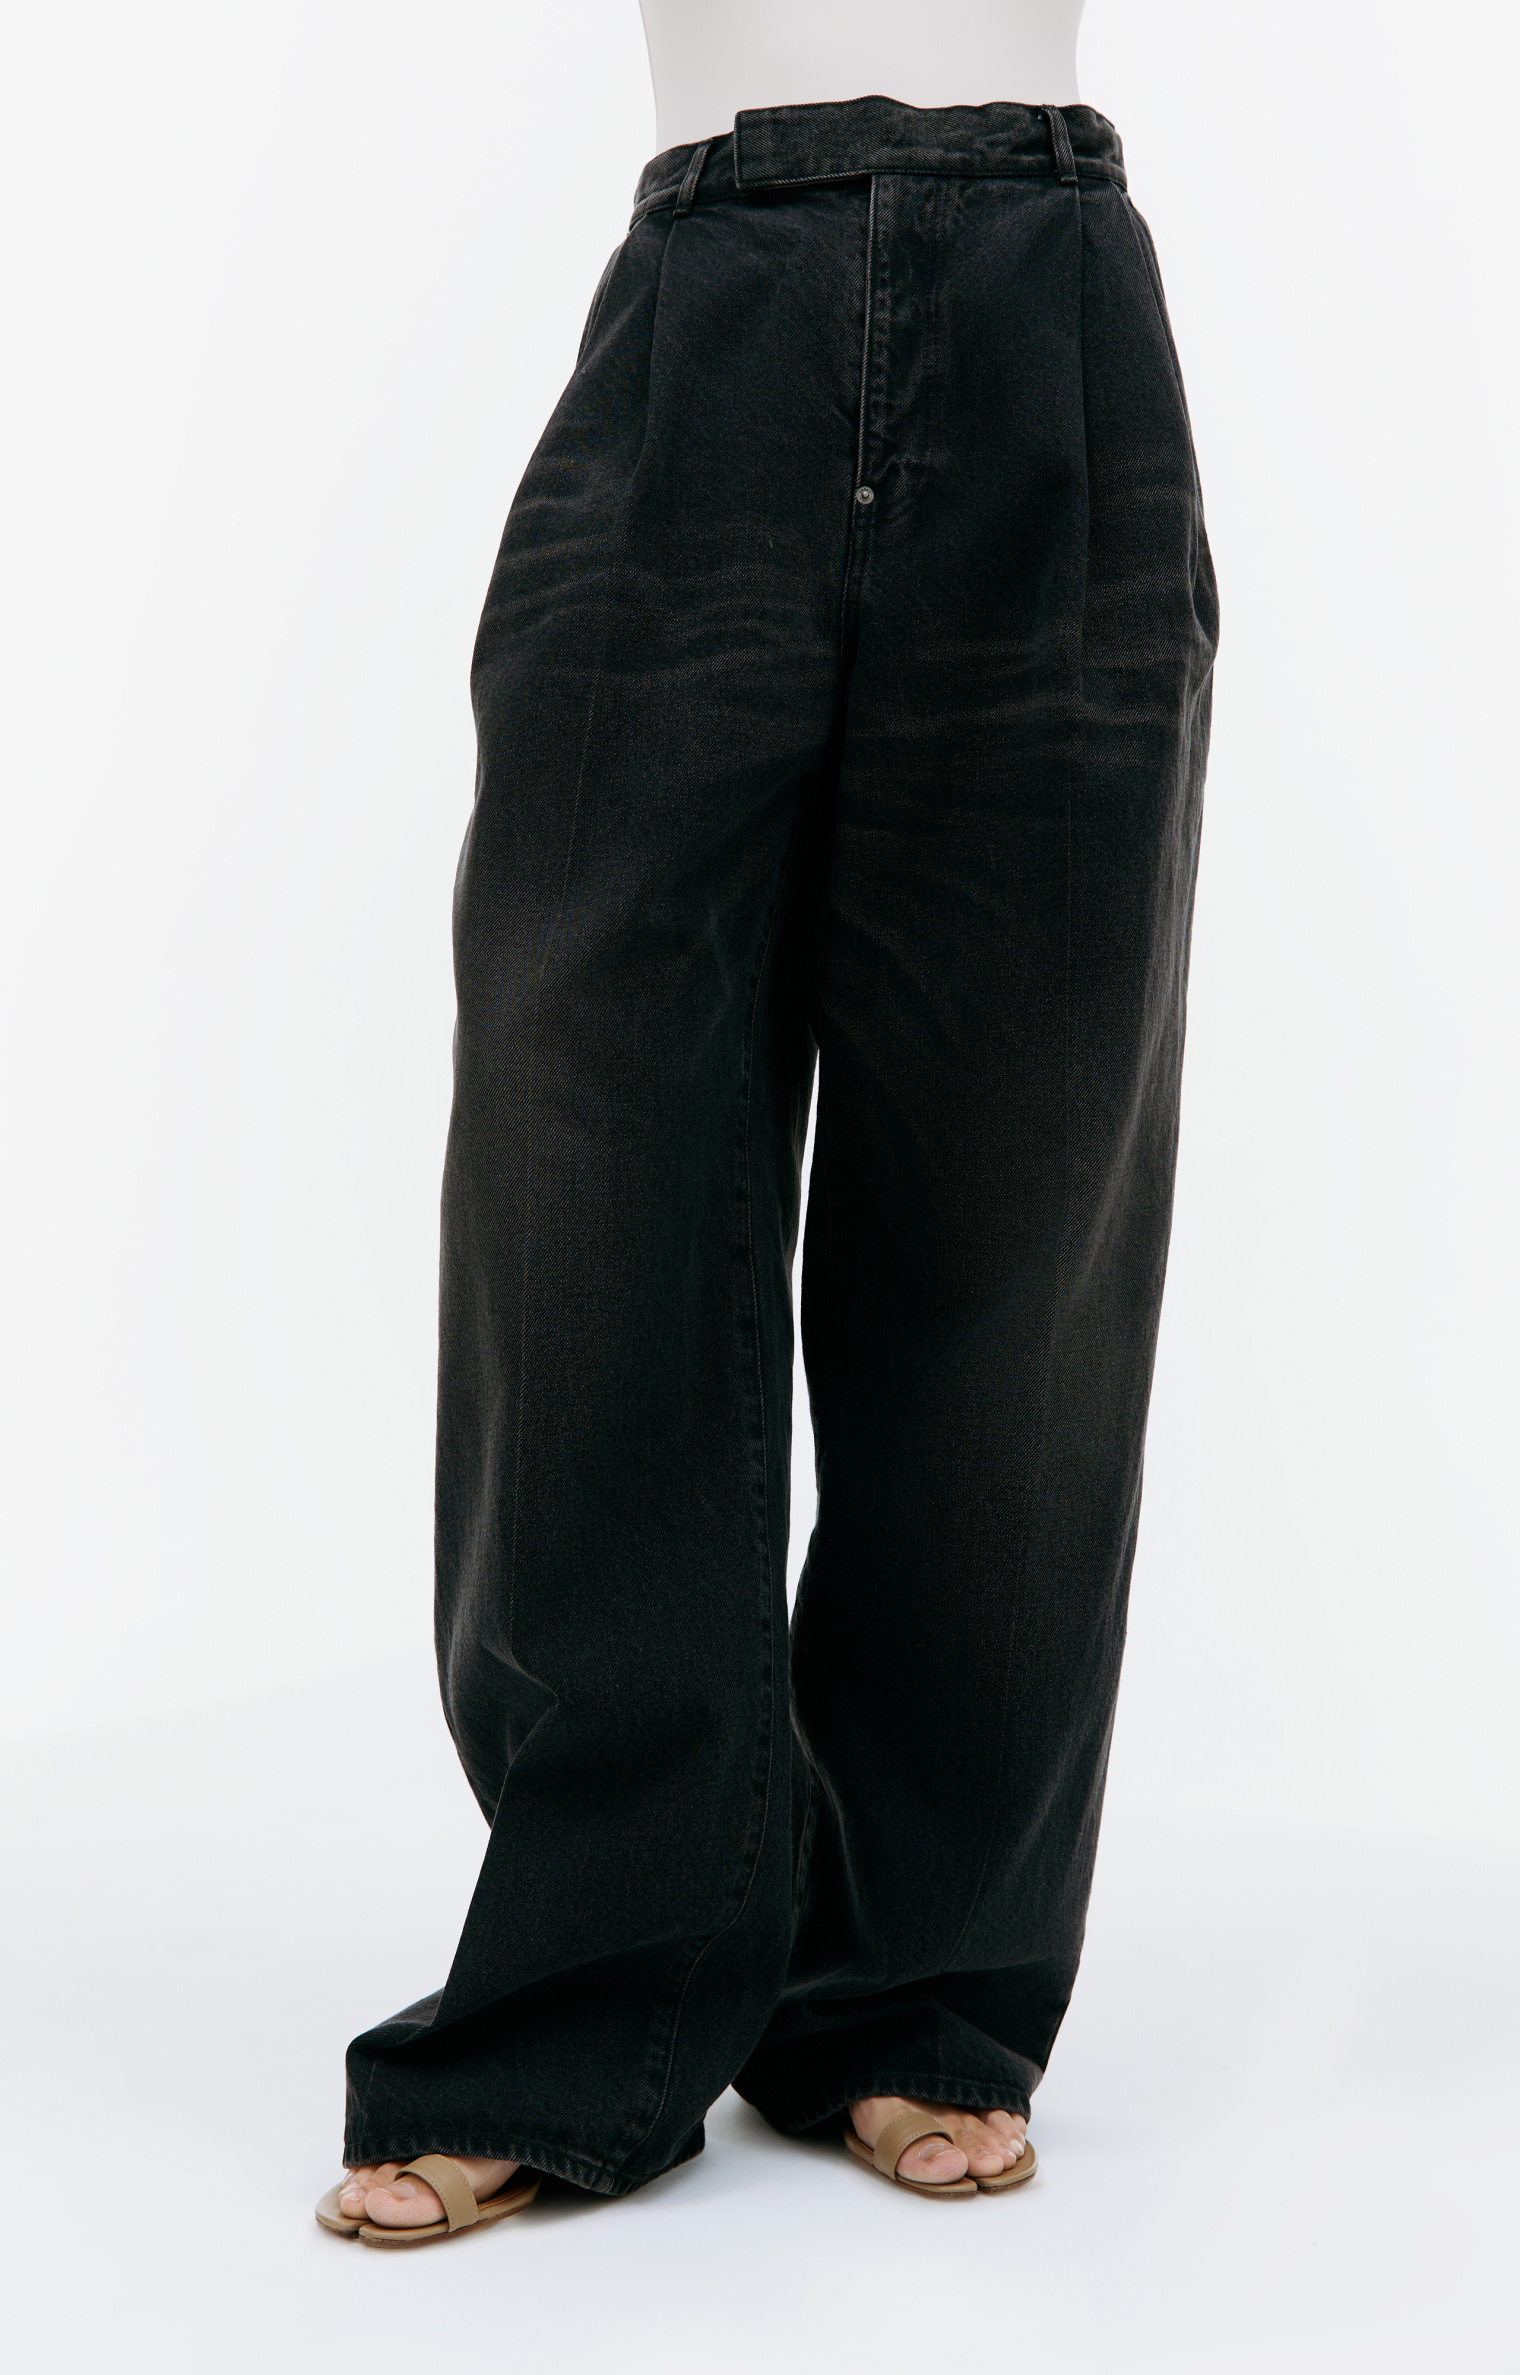 Undercover Black wide-leg jeans